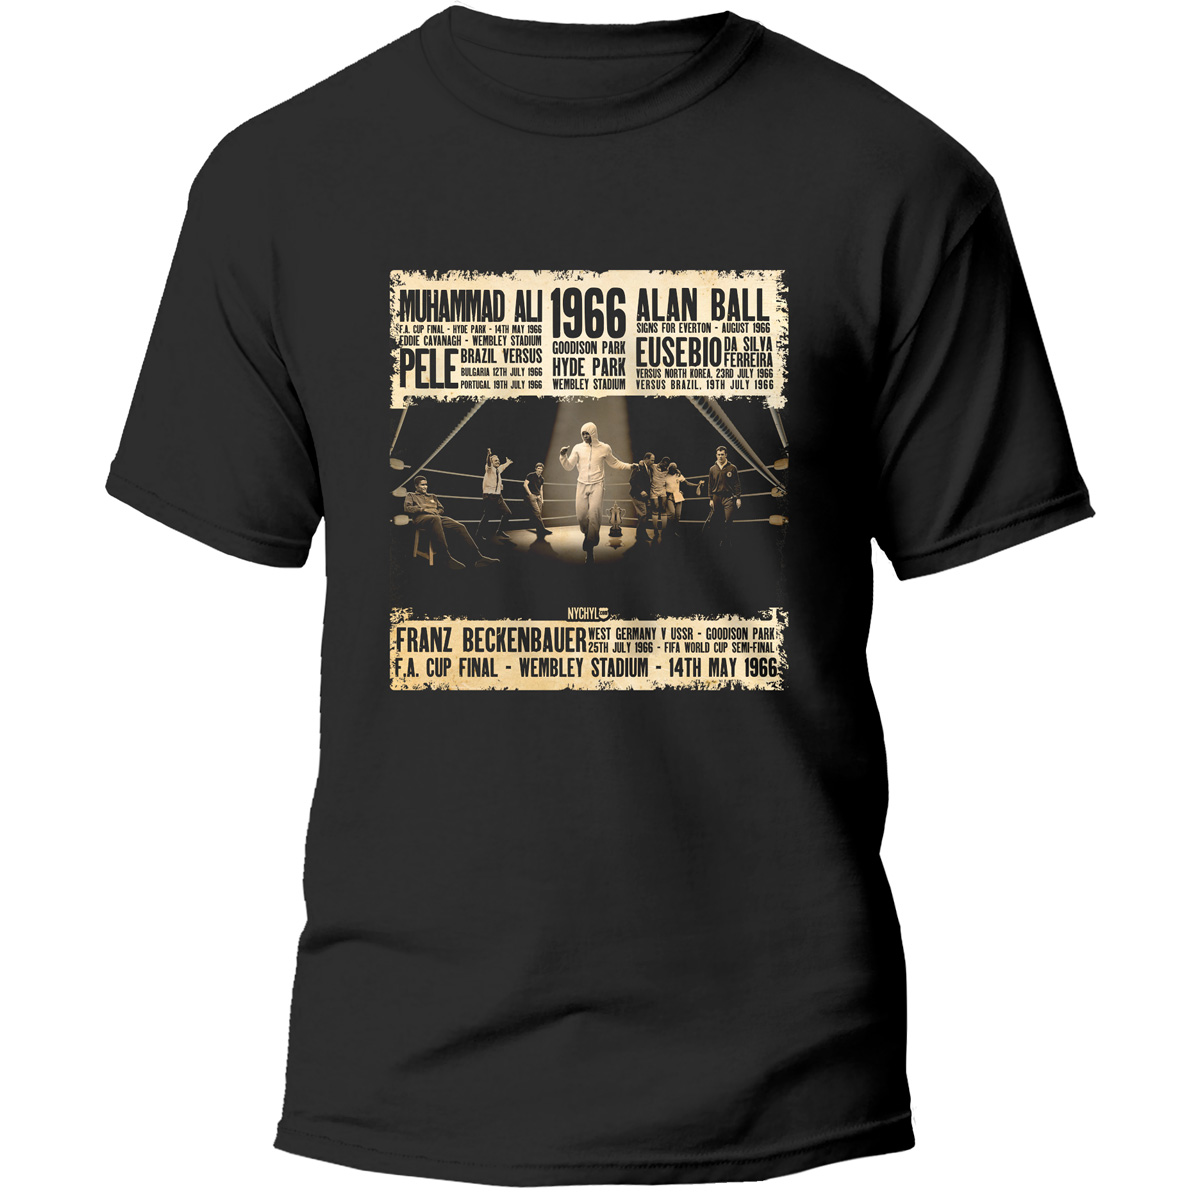 1966 t-shirt – NYCHYL Everton T-shirts